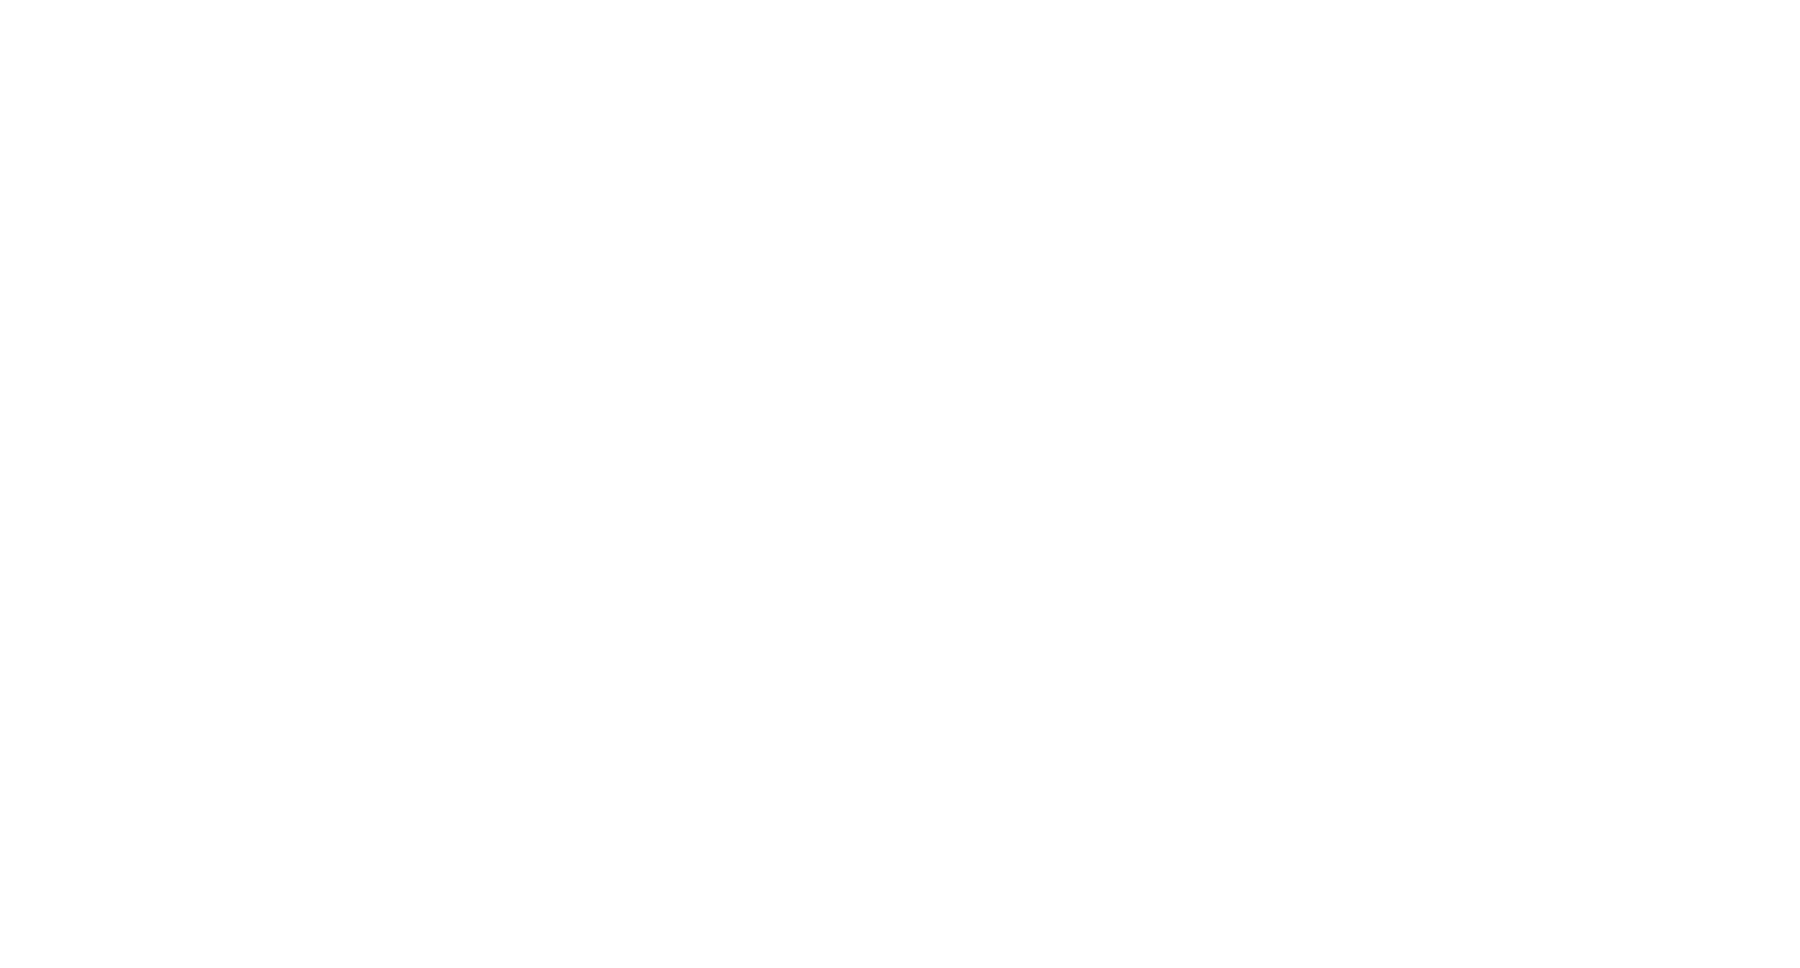 GS_Seahunt_logo